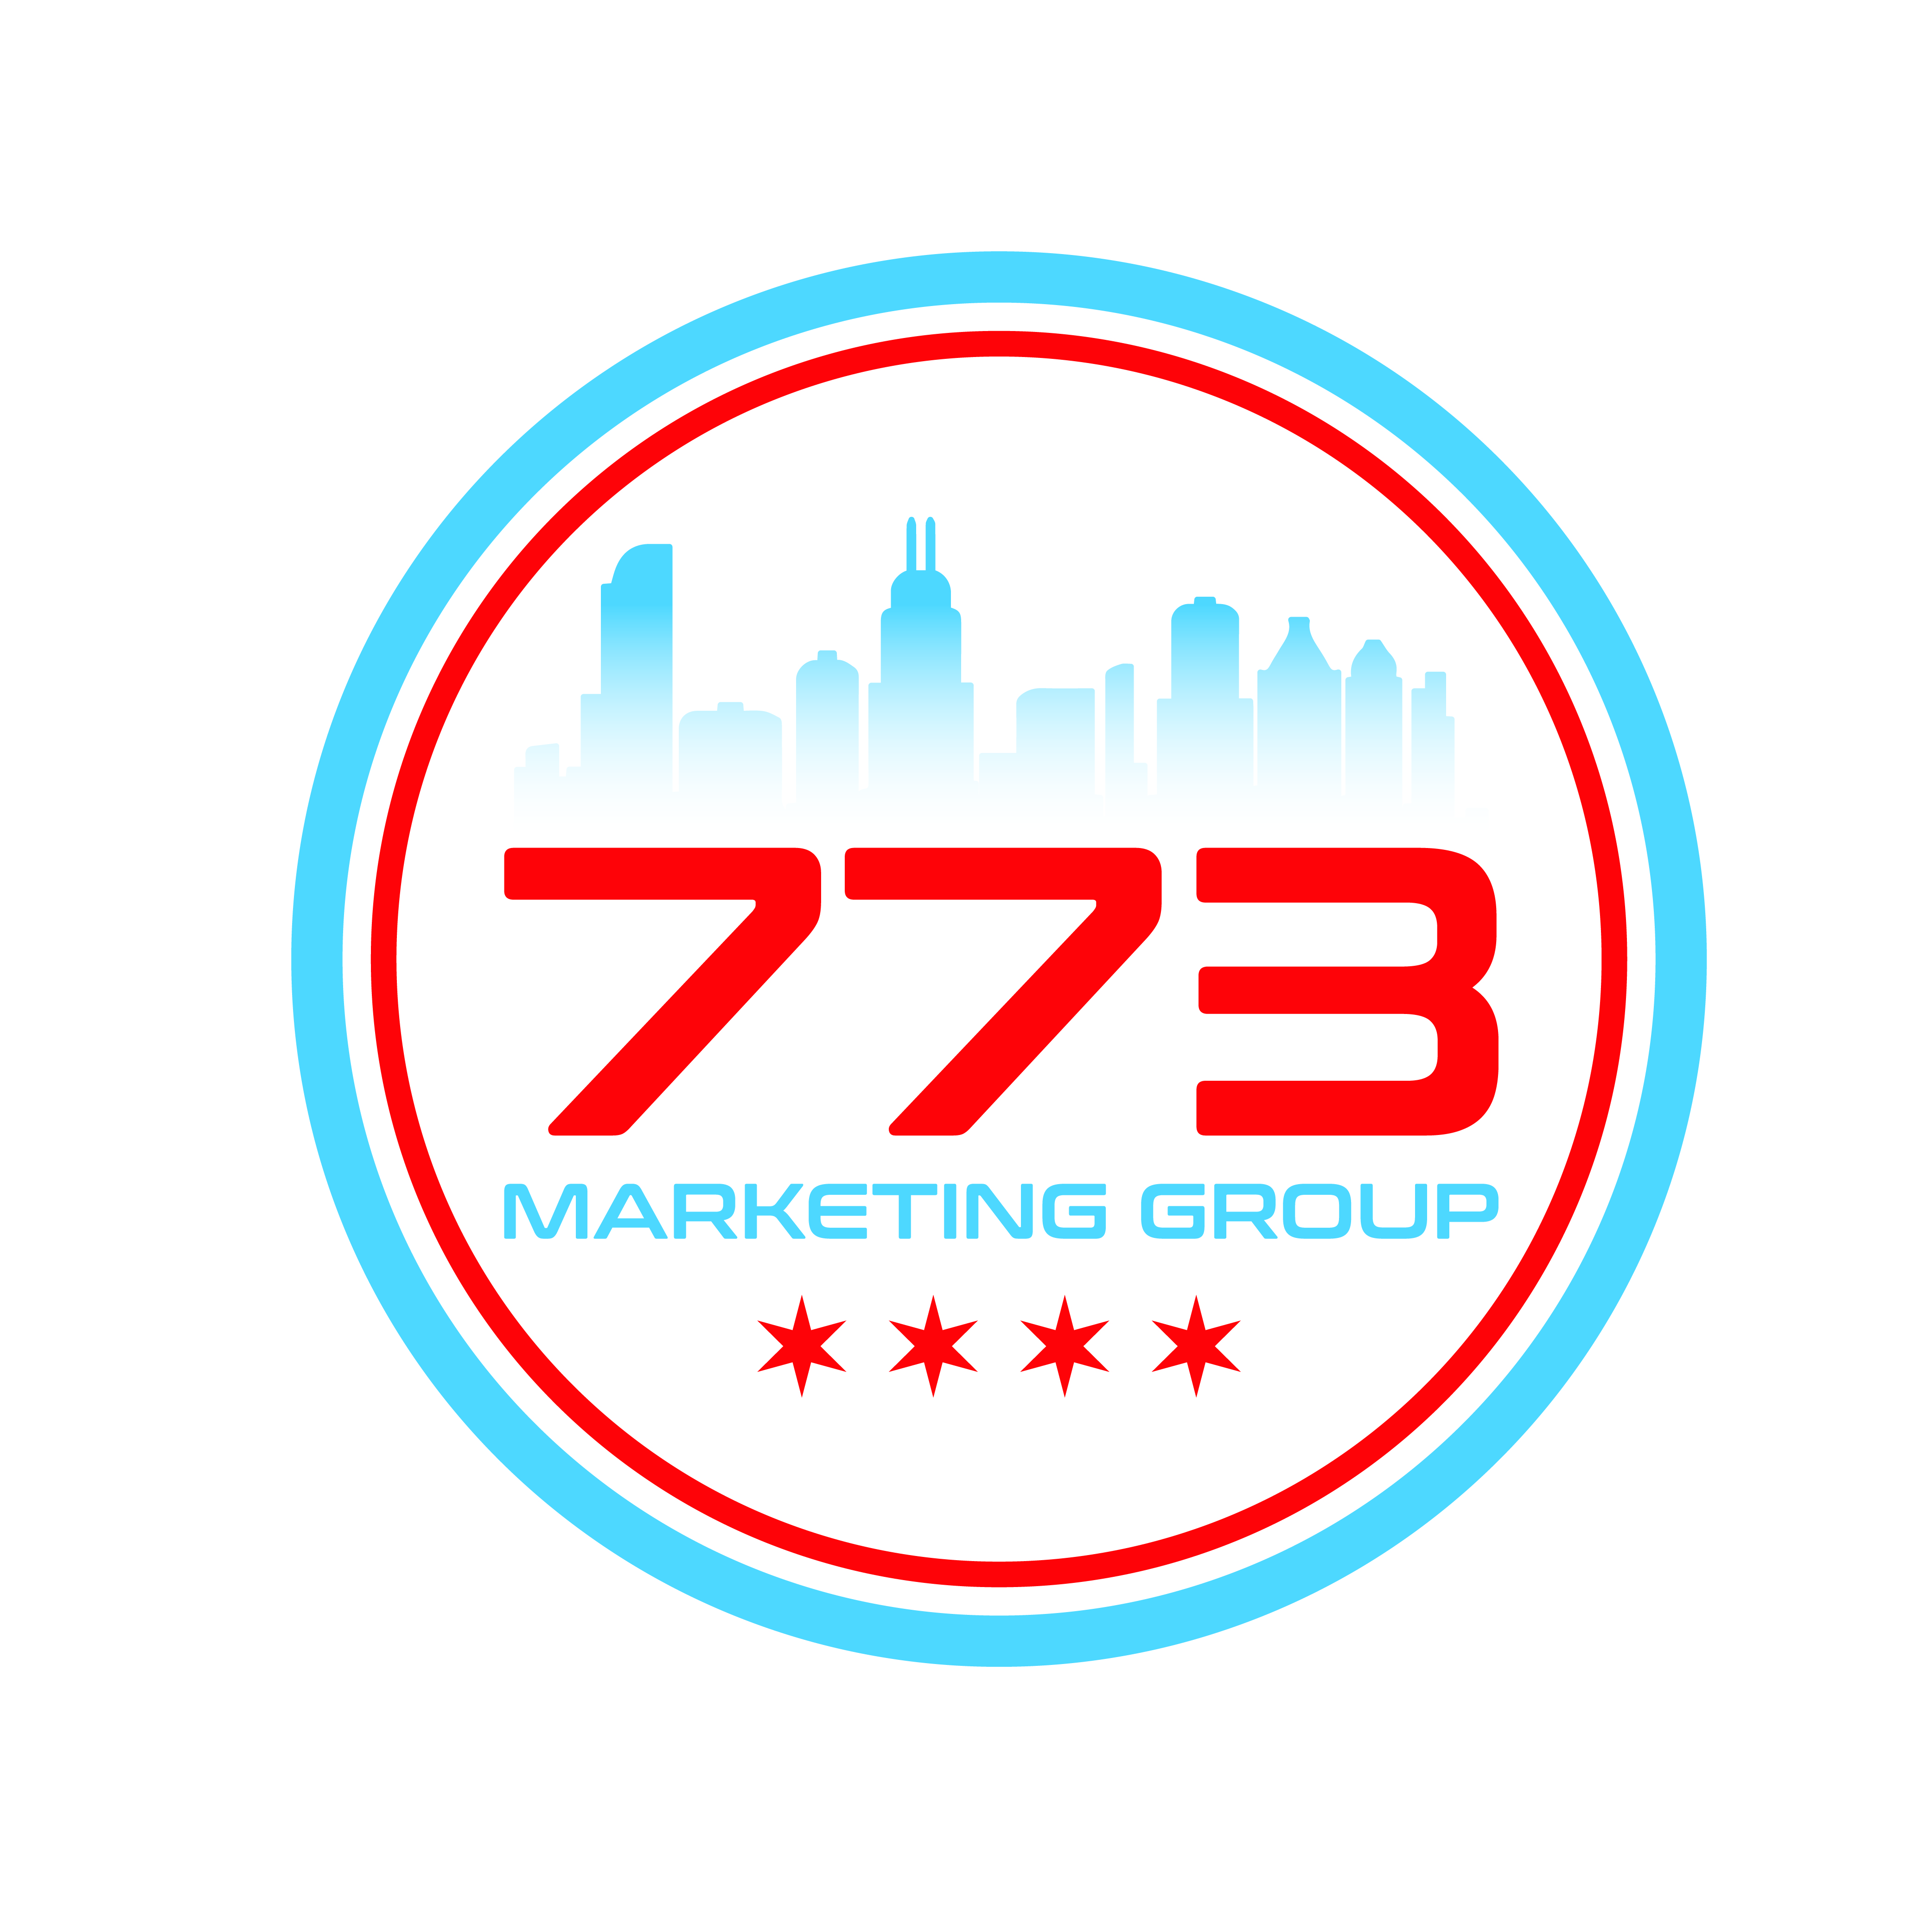 773 Marketing Group